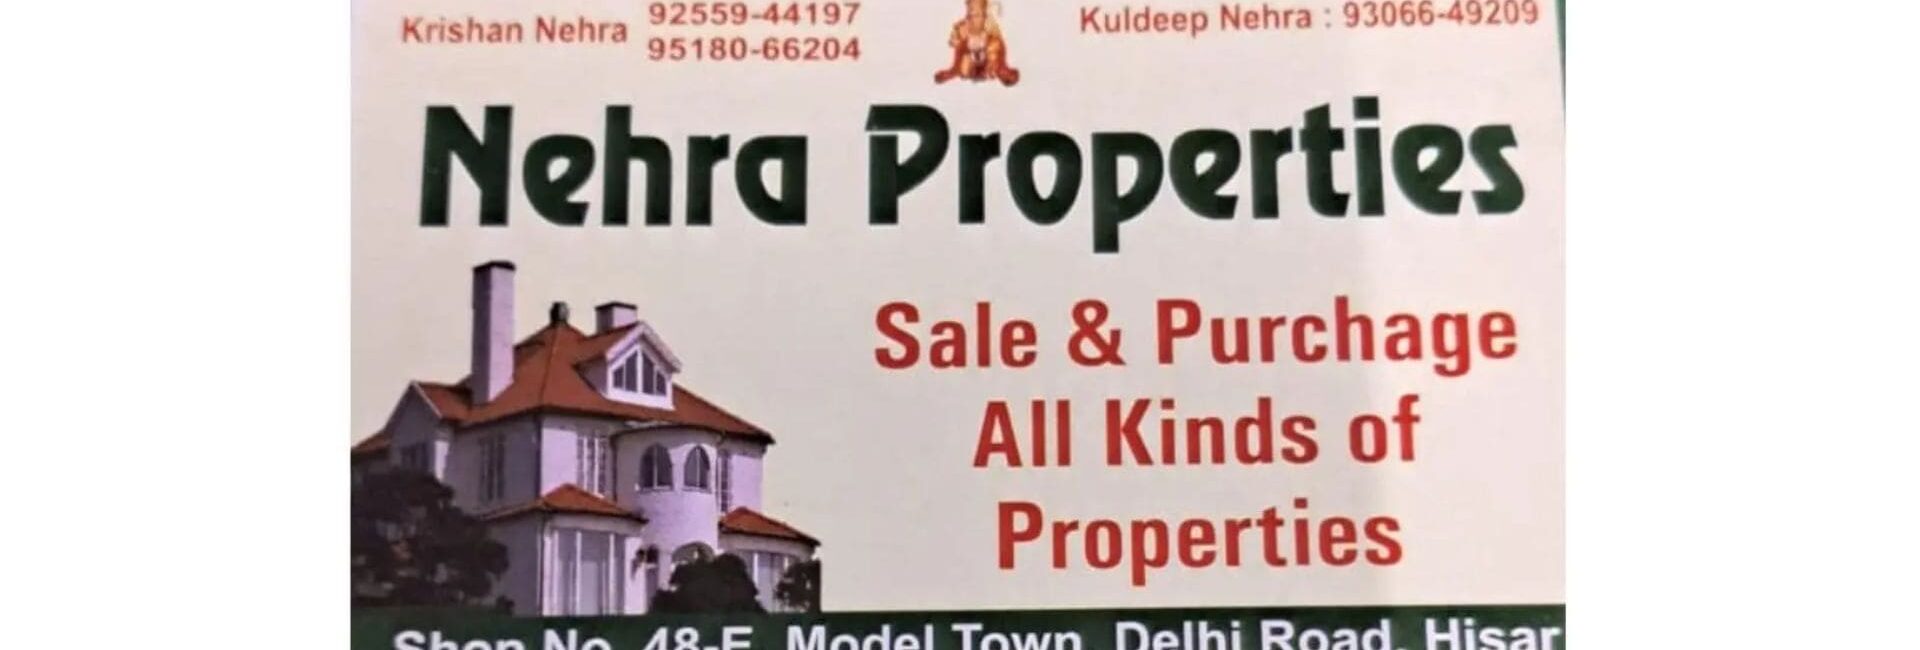 Nehra Properties - Real Estate in Hisar Model Town